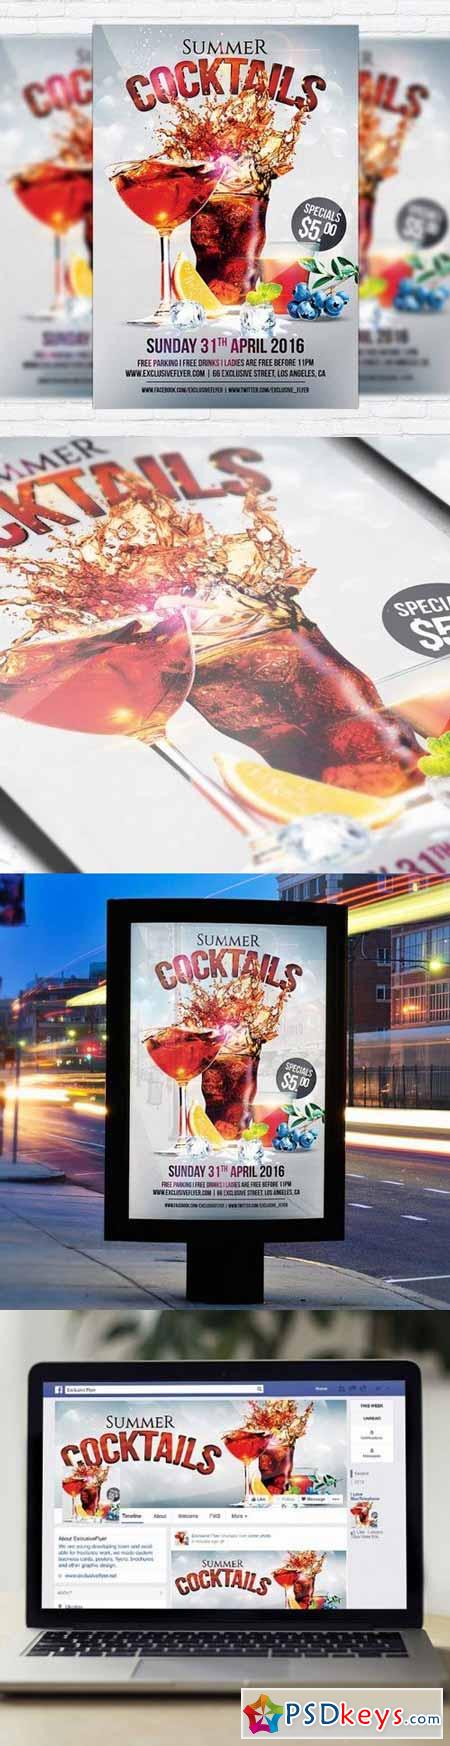 Summer Cocktails Flyer PSD Template + Facebook Cover